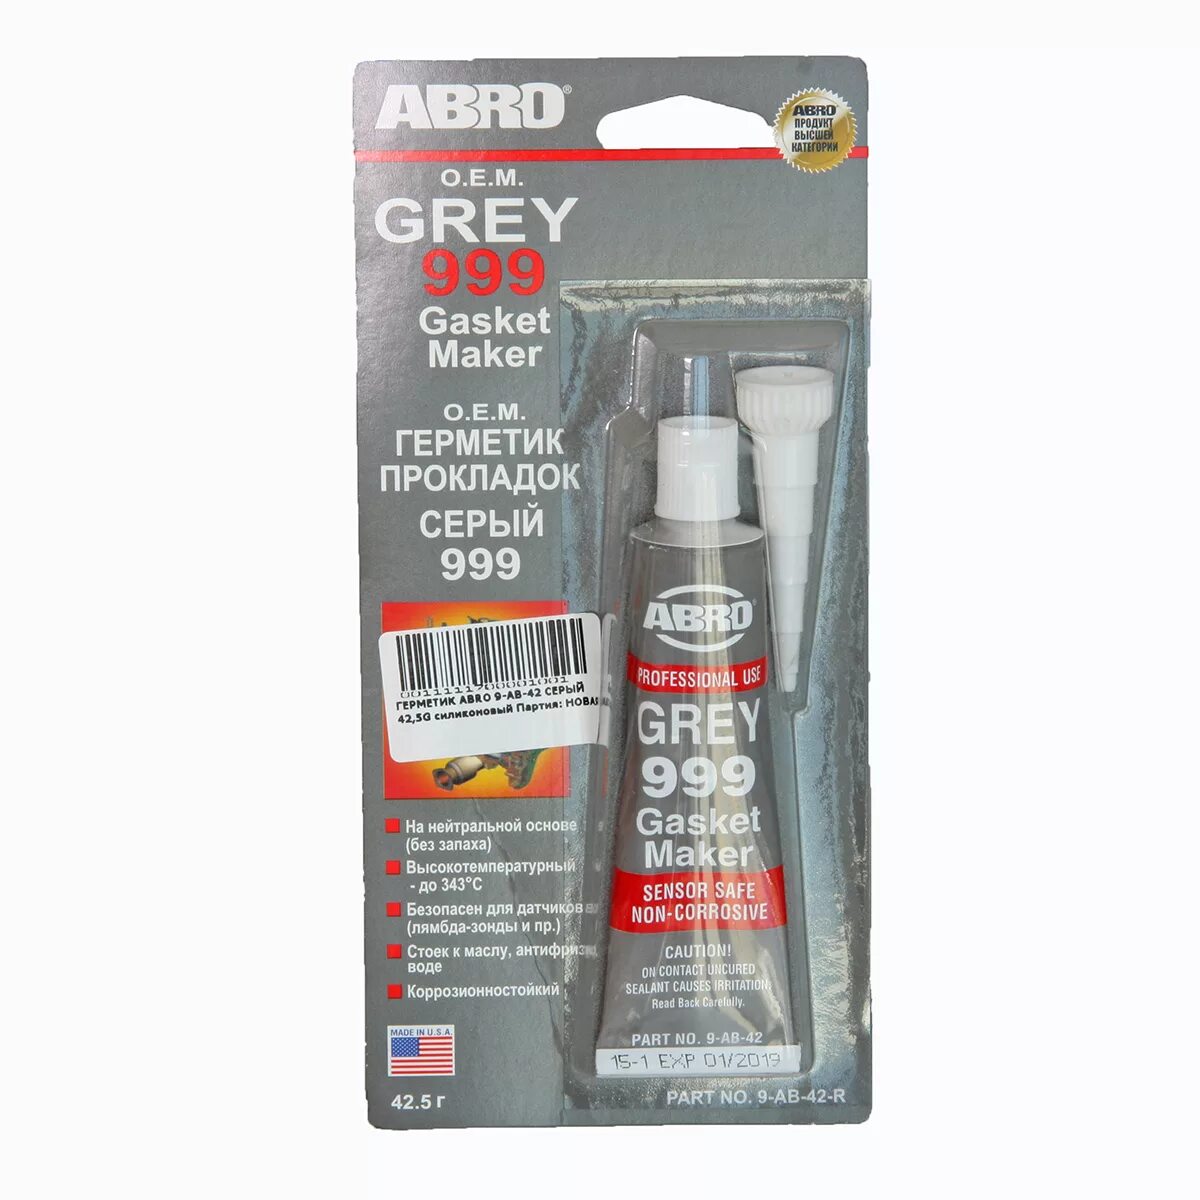 Abro 9-ab-42-RW. Герметик прокладок силиконовый abro, серый 42,5 г. Герметик прокладок abro (42.5гр) Grey 999. Герметик силиконовый abro 9ab.